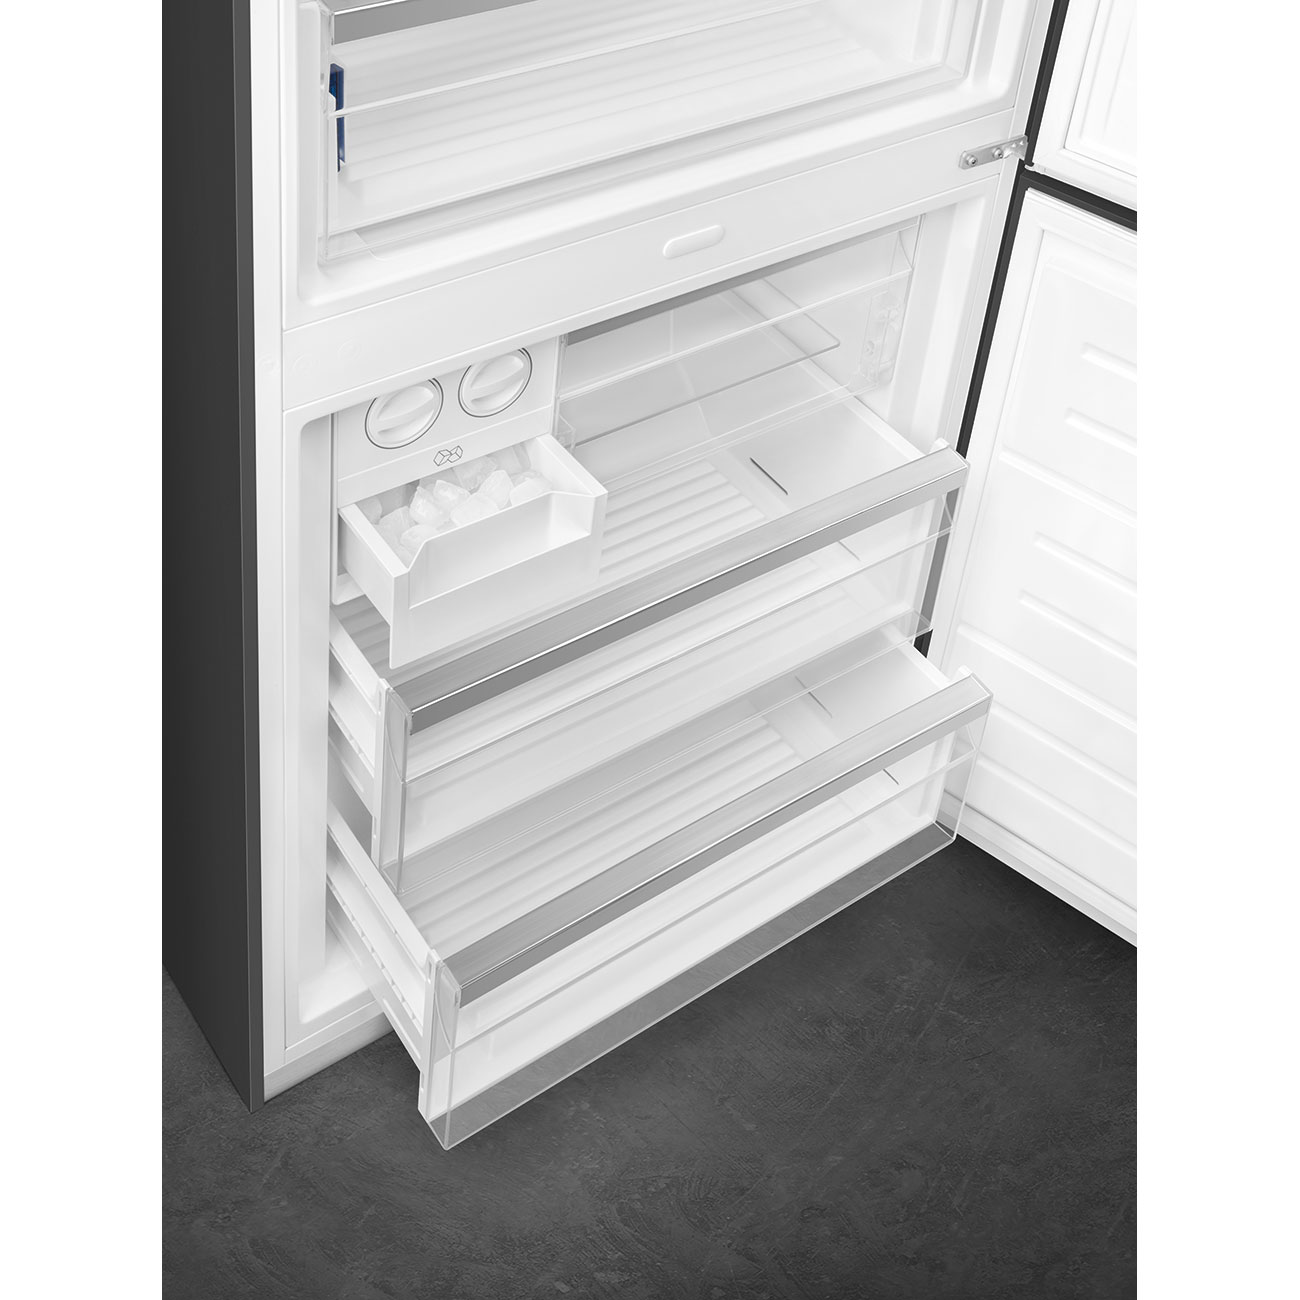 Bottom Mount Free standing refrigerator - Smeg_9